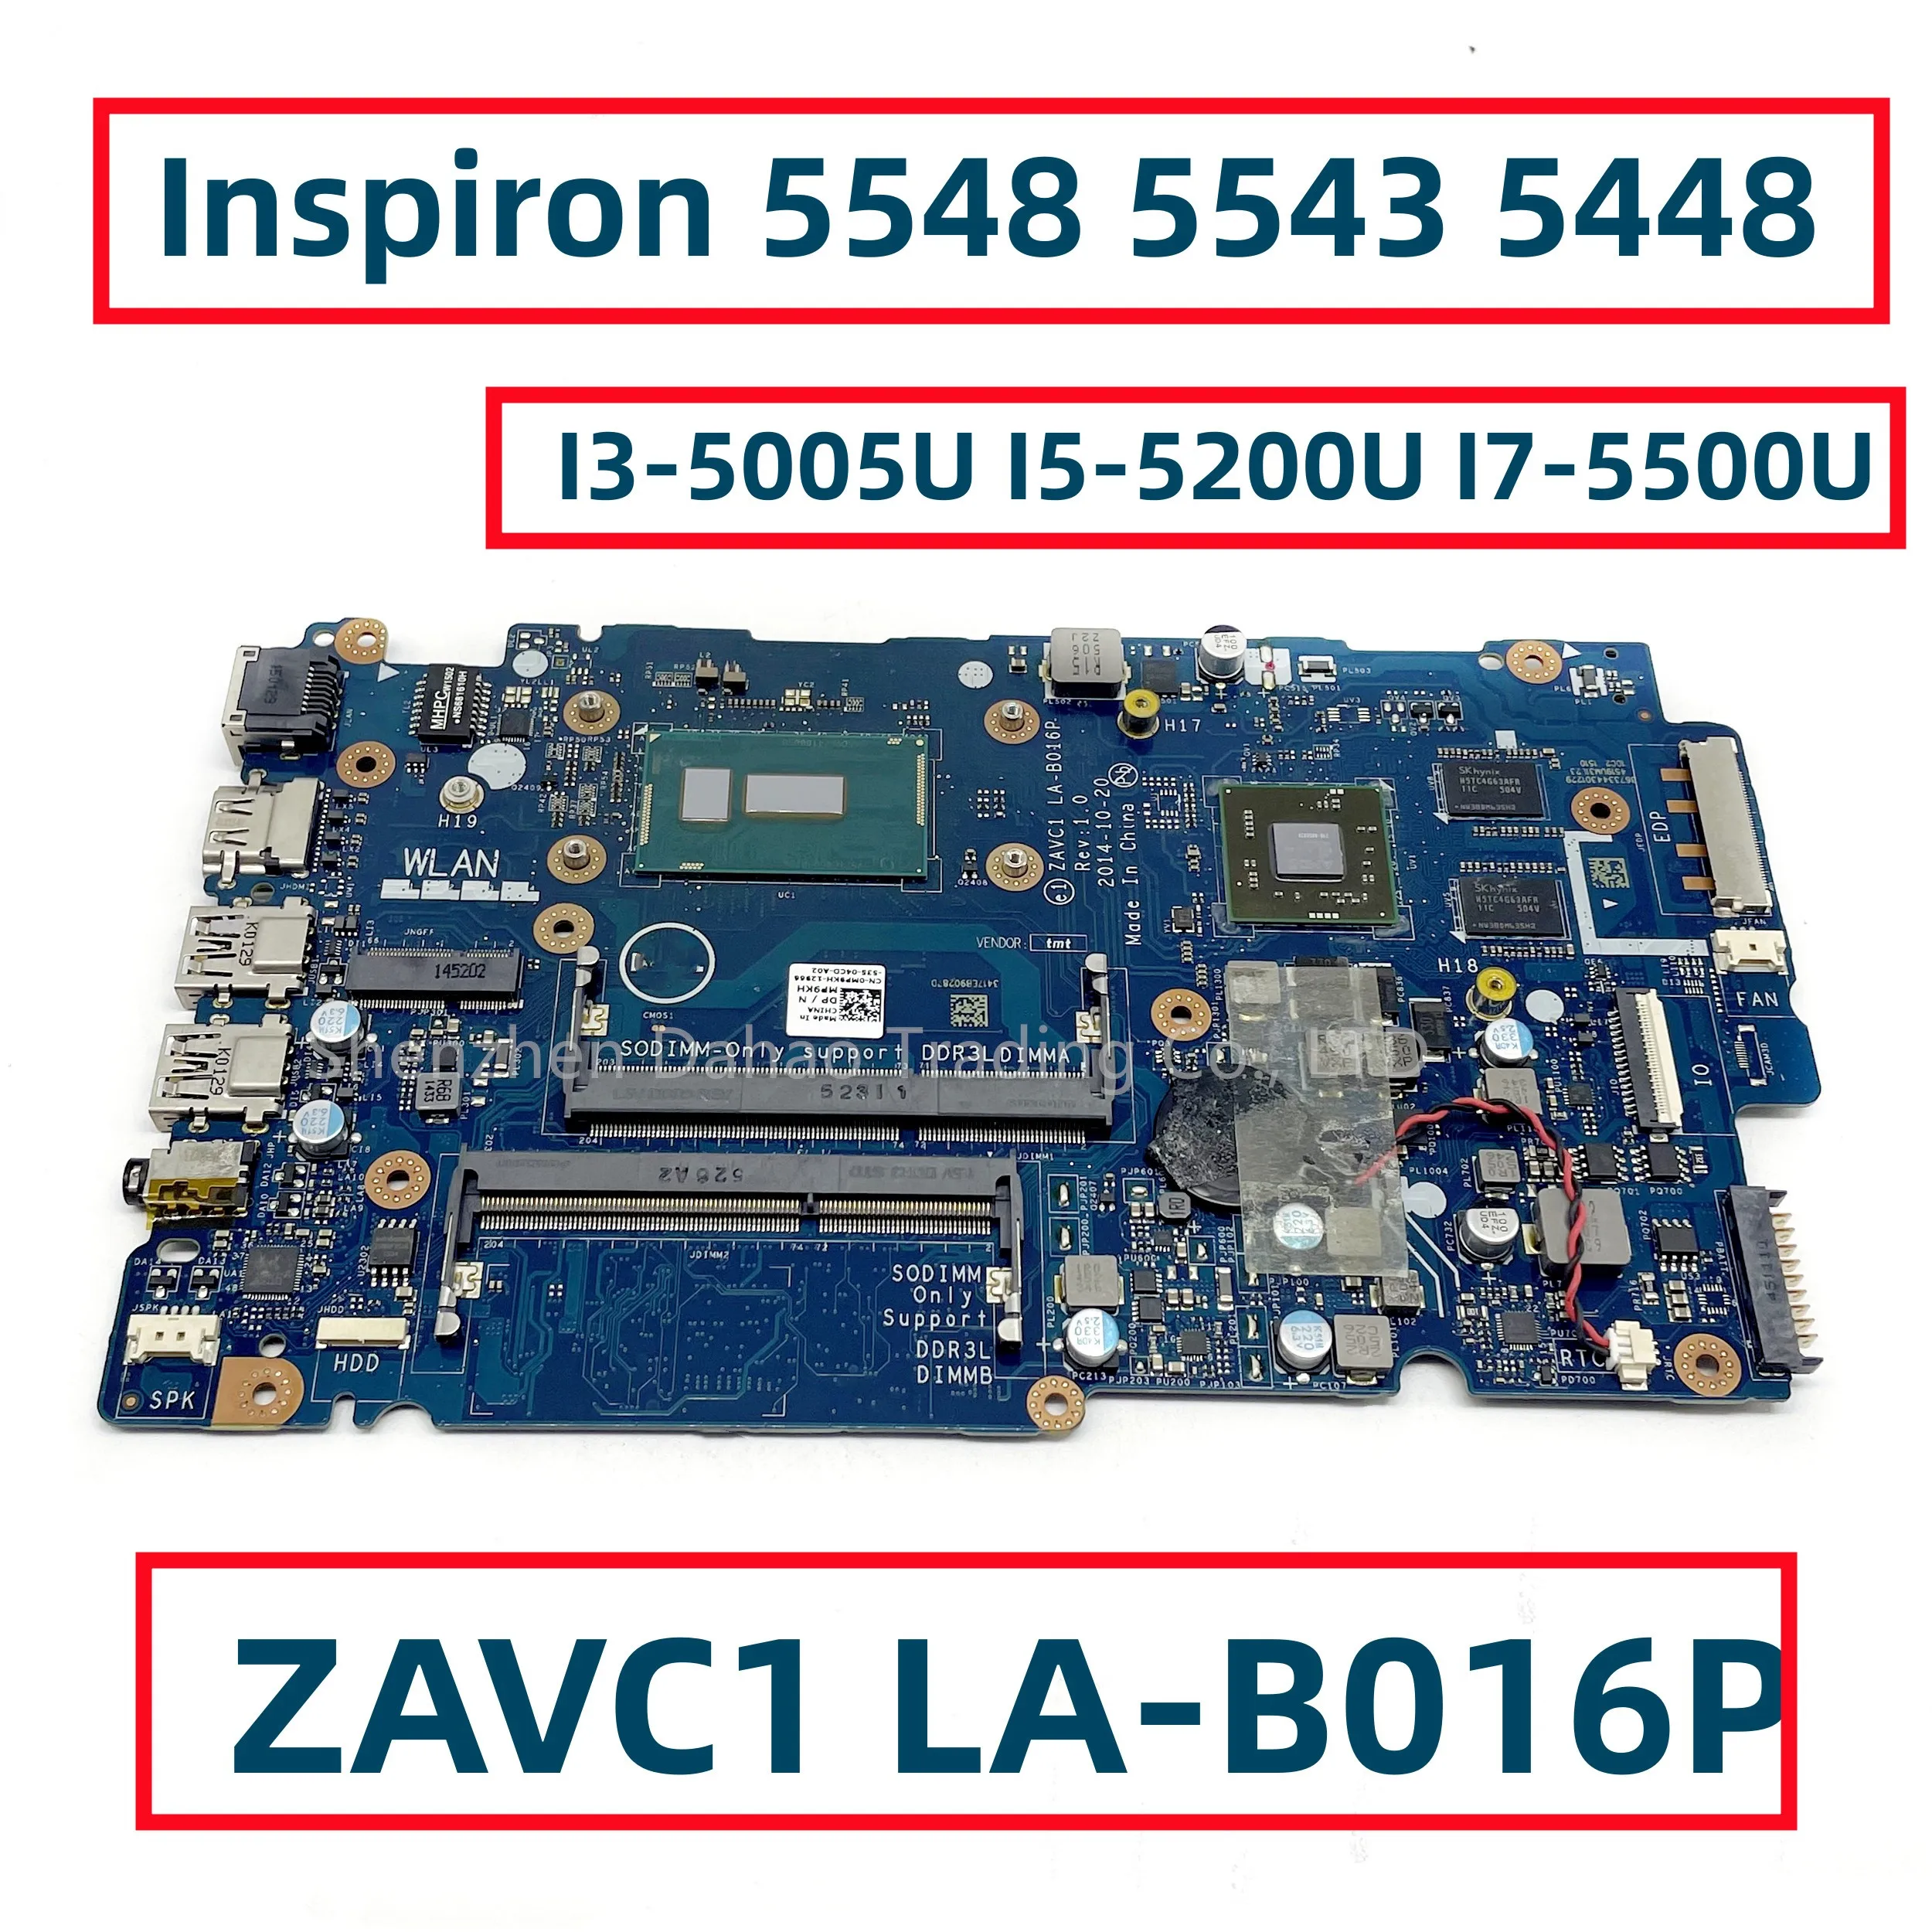 

216-0858020 ZAVC1 LA-B016P For dell Inspiron 5548 5543 5448 Laptop Motherboard With I3-5005U I5-5200U I7-5500U CPU CN-08G7TP